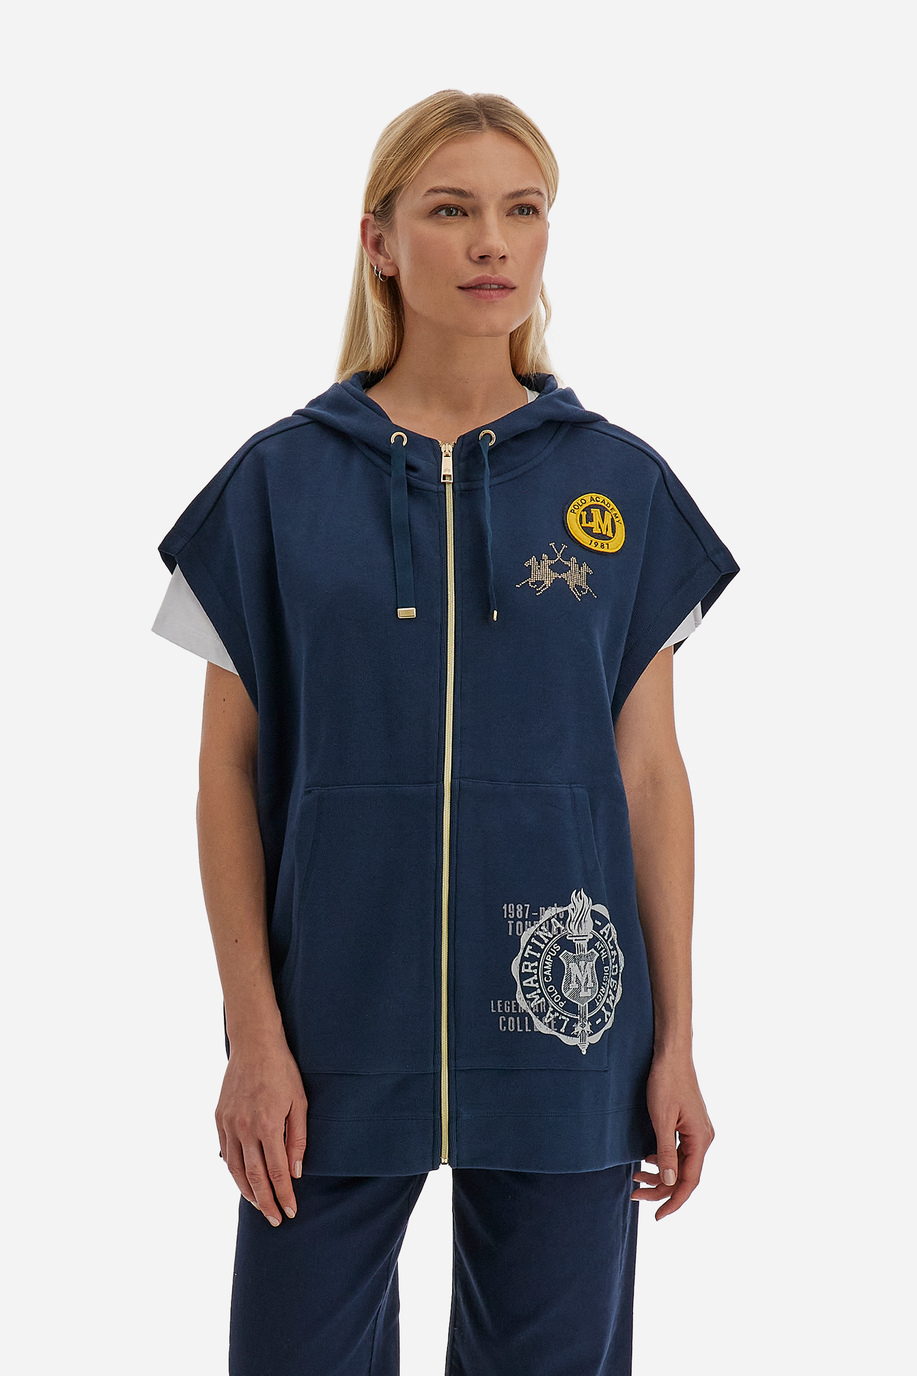 Women's sleeveless full-zip sweatshirt in solid color Polo Academy - Vondra - Easy wear Women | La Martina - Official Online Shop